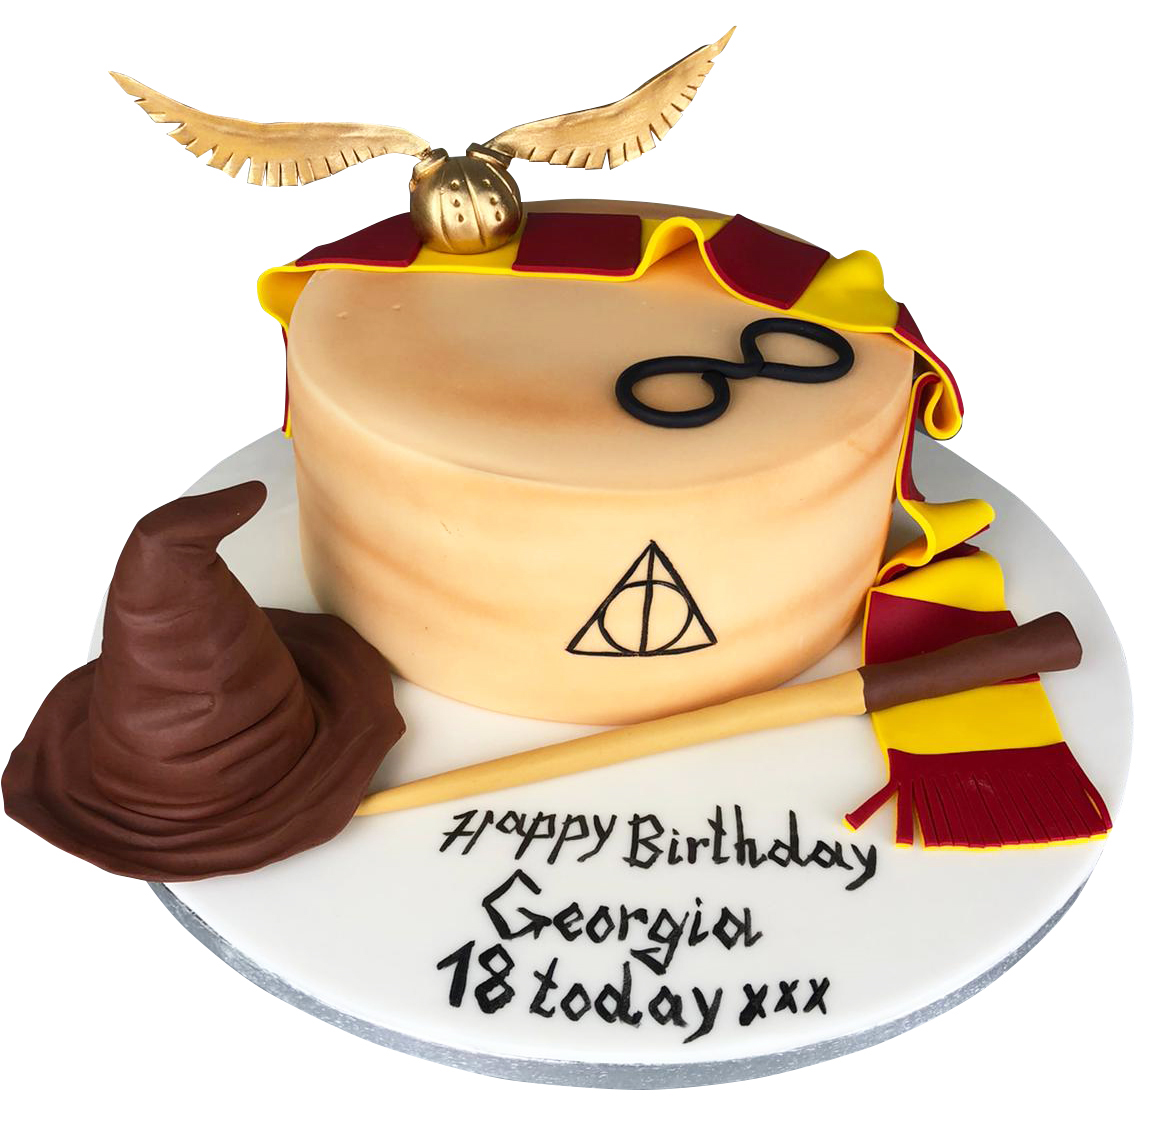 Harry Potter Cake